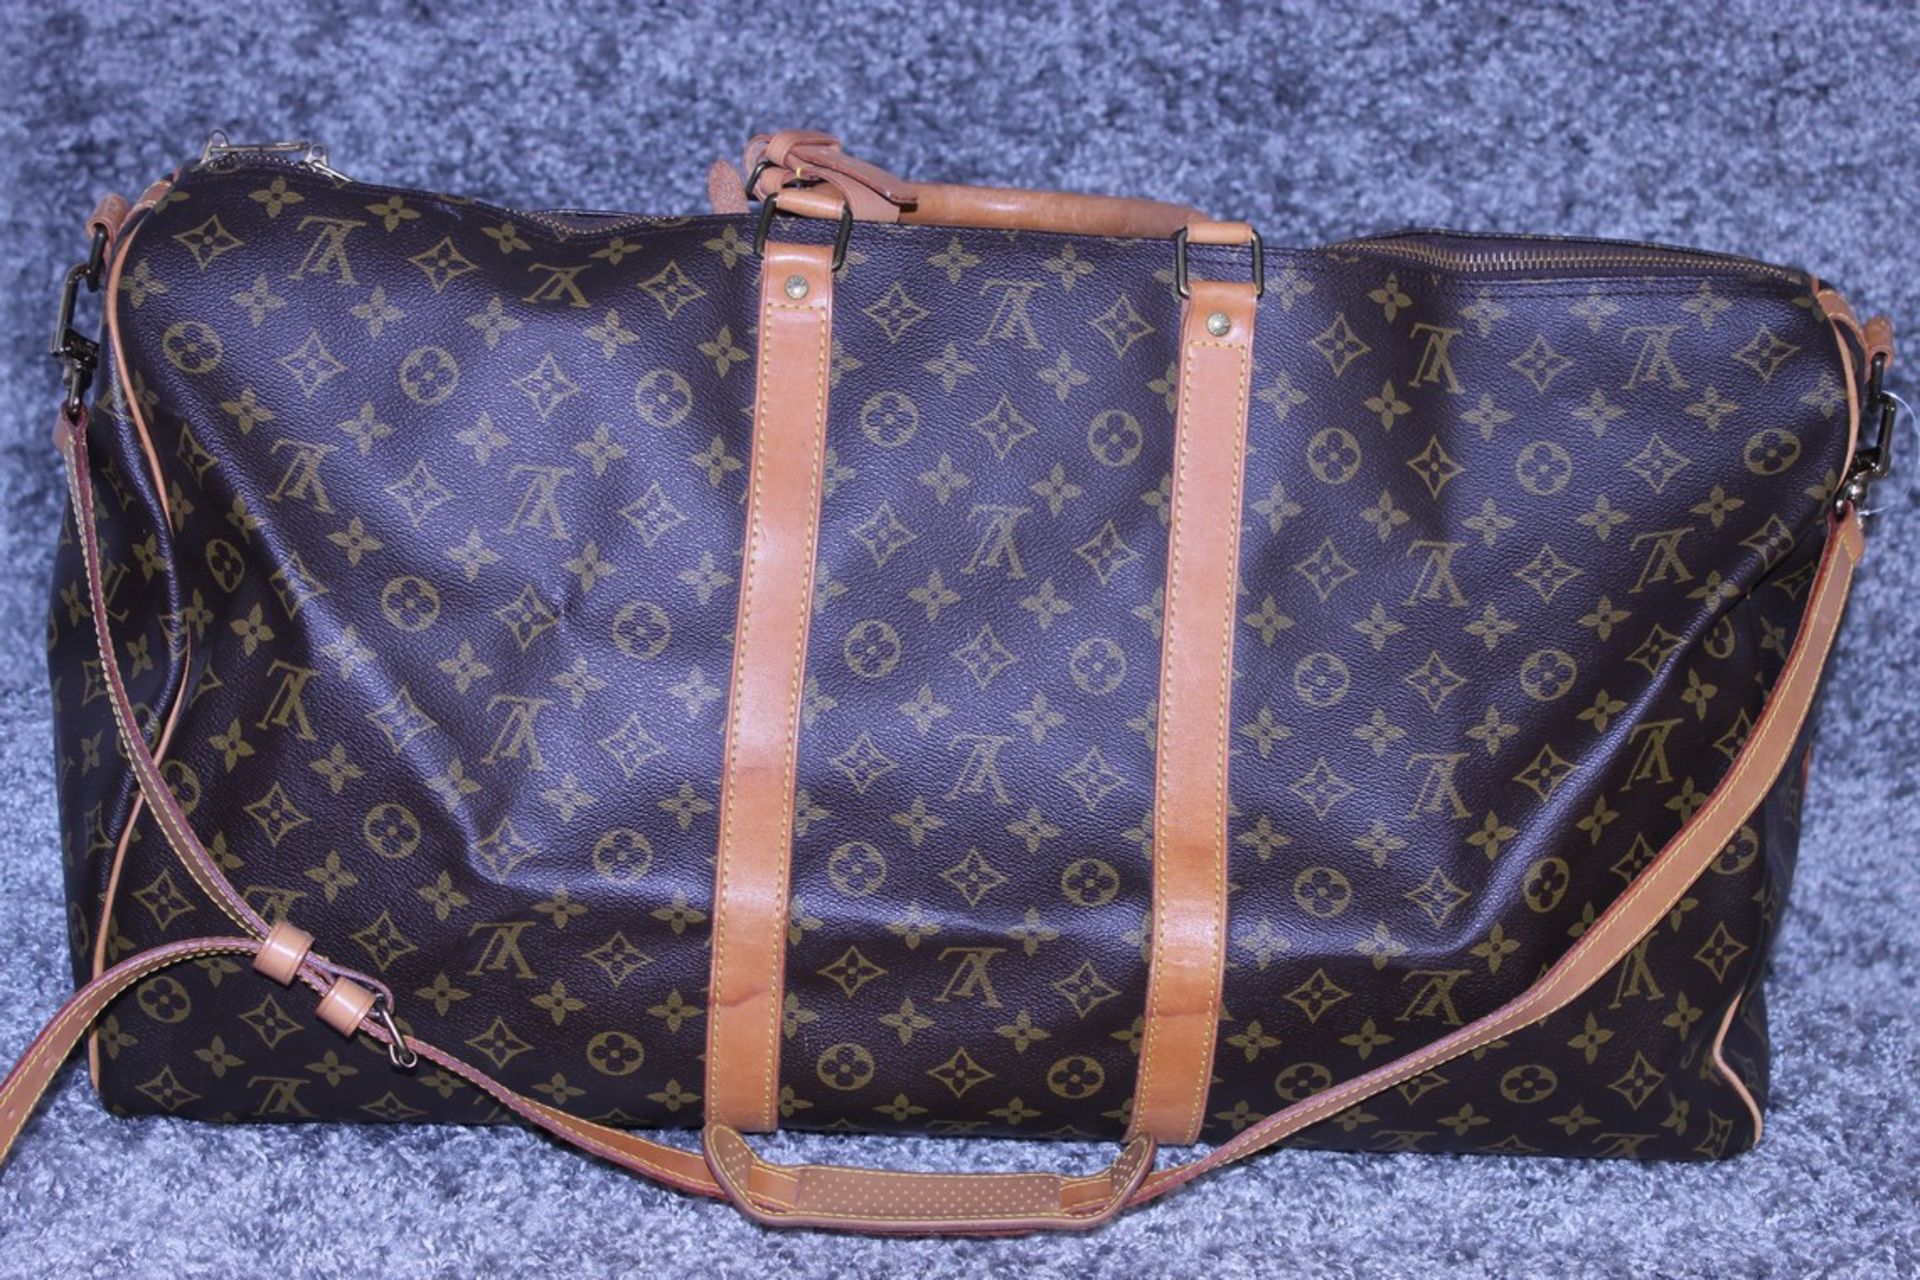 RRP £1,800 Louis Vuitton Keepall 60 Bandouliere Travel Bag, Brown Coated Canvas Monogram, 60X26X31Cm